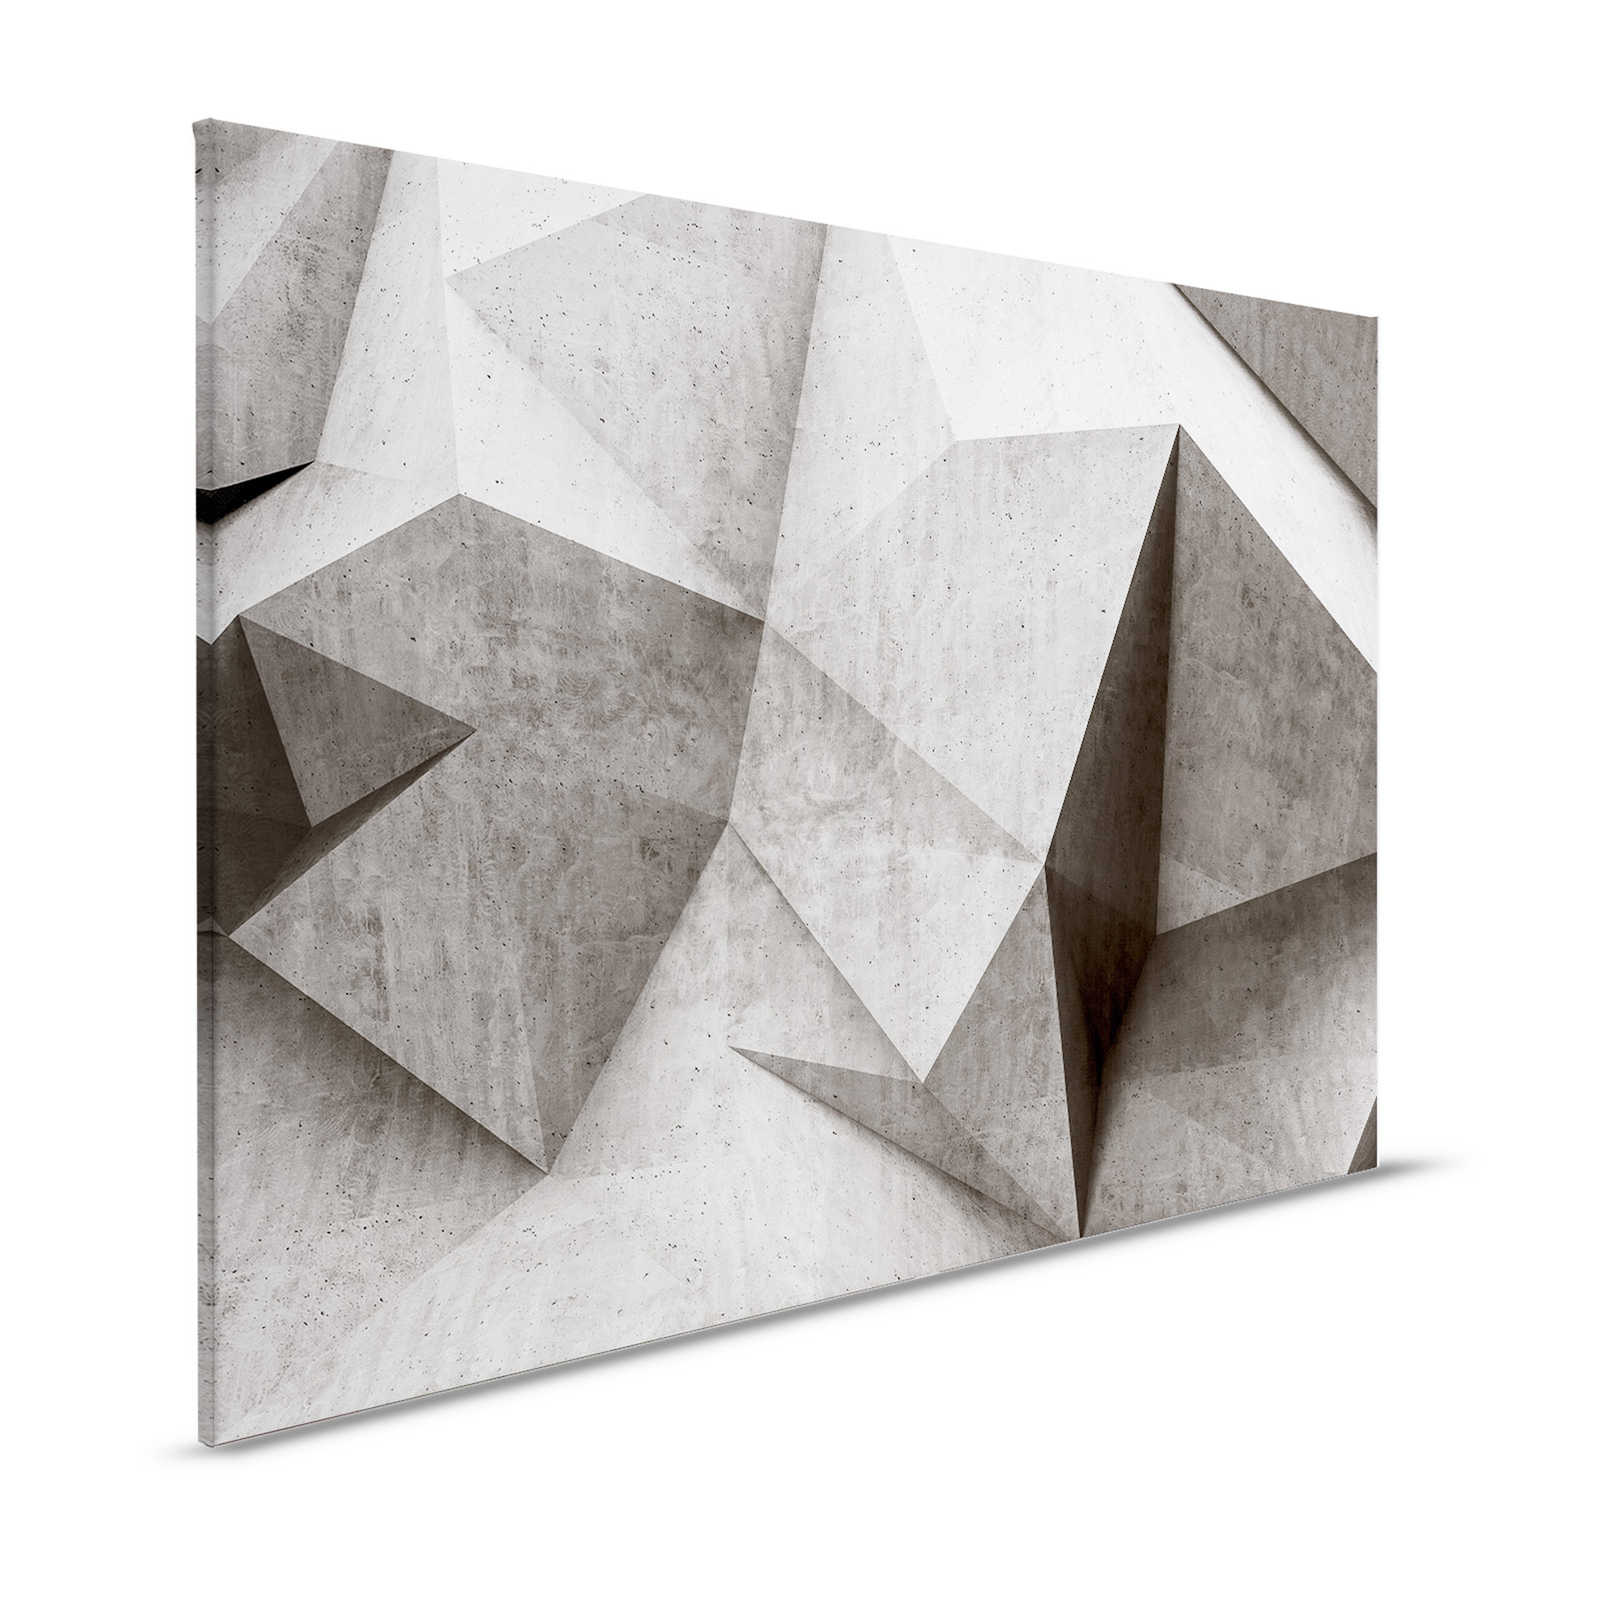 Boulder 1 - Coole 3D Beton-Polygone Leinwandbild – 1,20 m x 0,80 m
